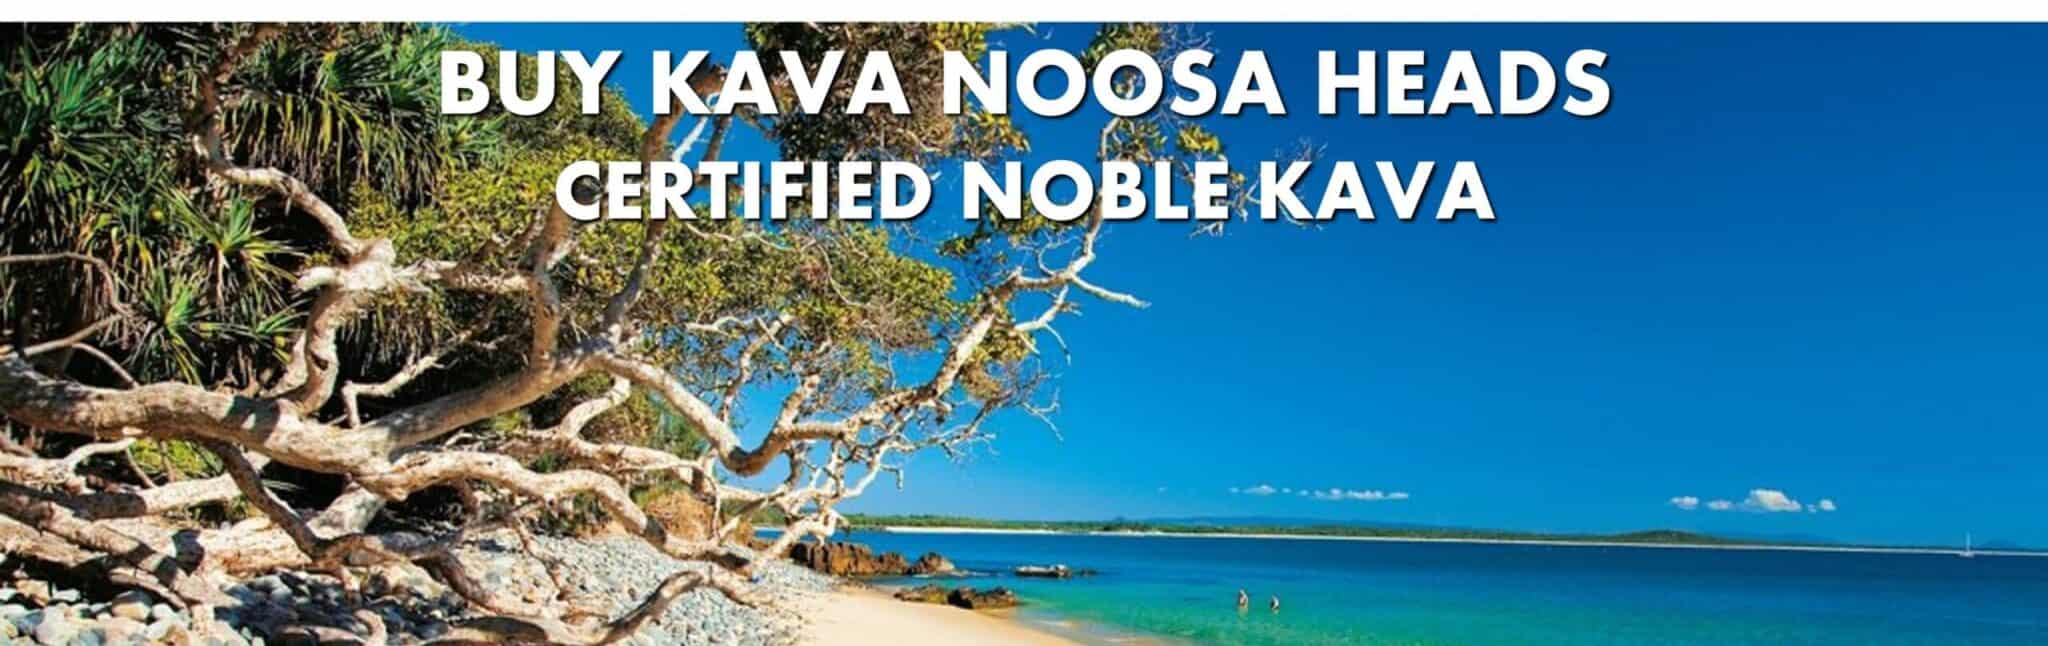 Beach scene in Noosa Heads Queensland with caption Buy Kava Noosa Heads Certified Noble Kava